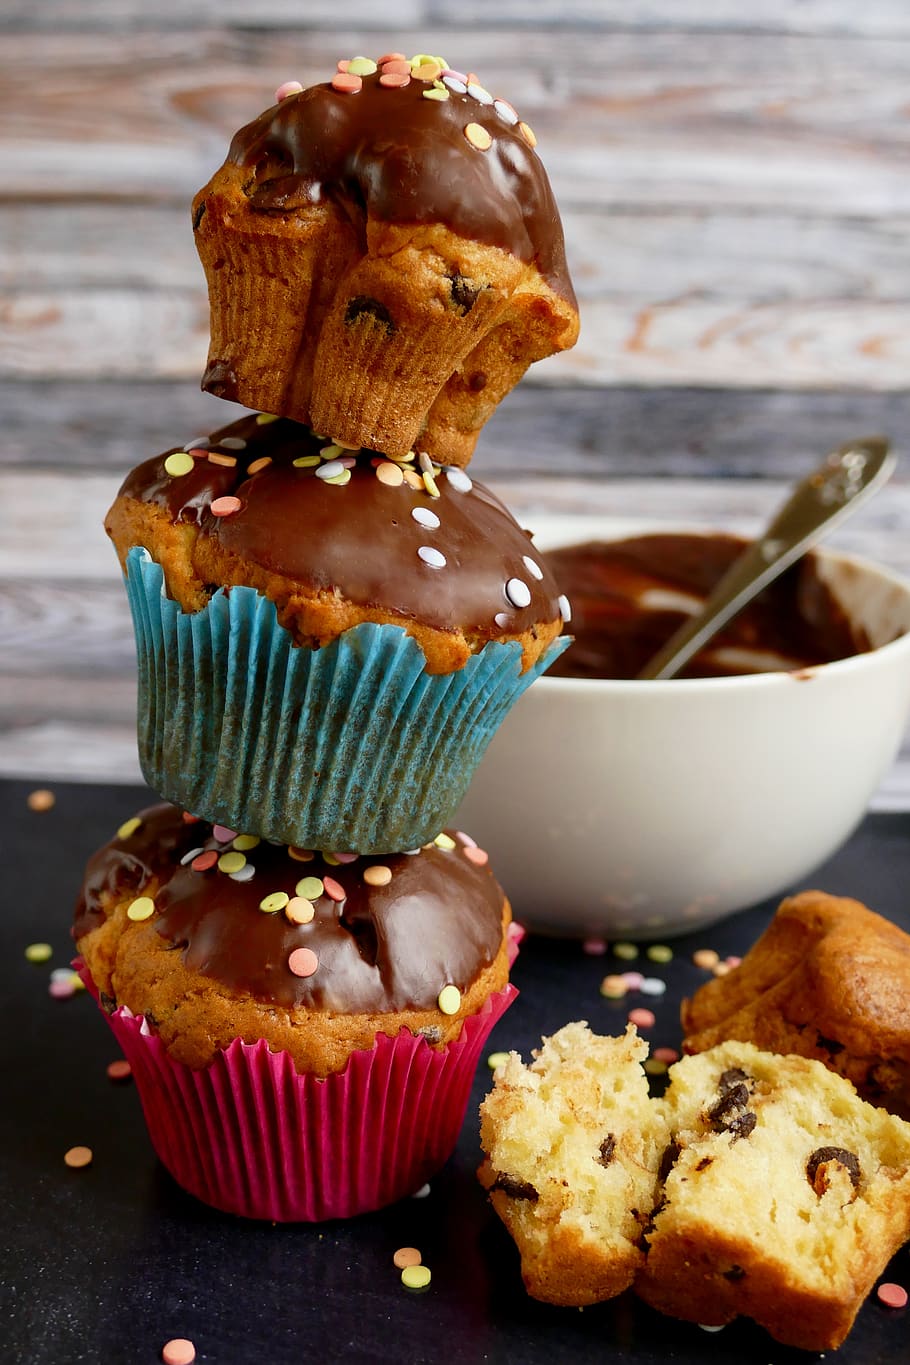 muffins, cupcakes, cake, dessert, sweet, cupcake, bake, delicious, chocolate, muffin